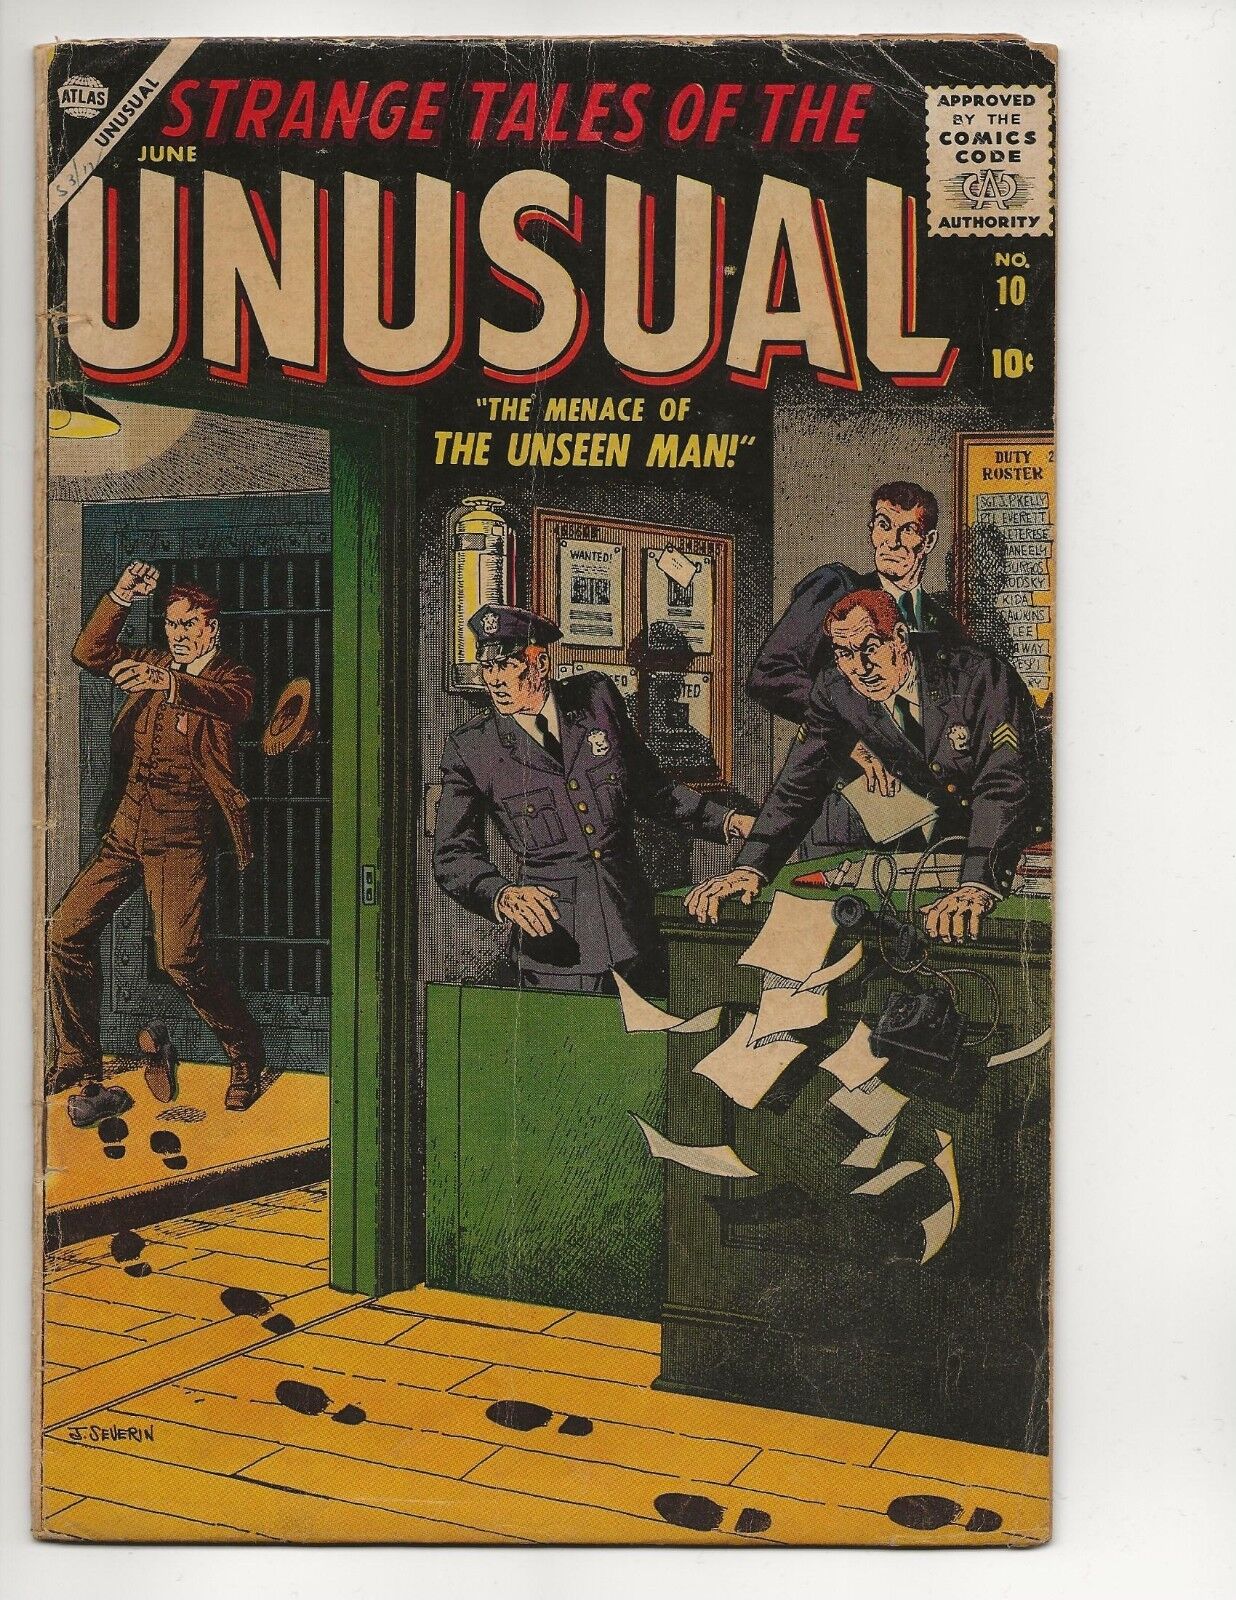 STRANGE TALES OF THE UNUSUAL #10 VG ATLAS COMICS 1957 INVISIBLE MAN